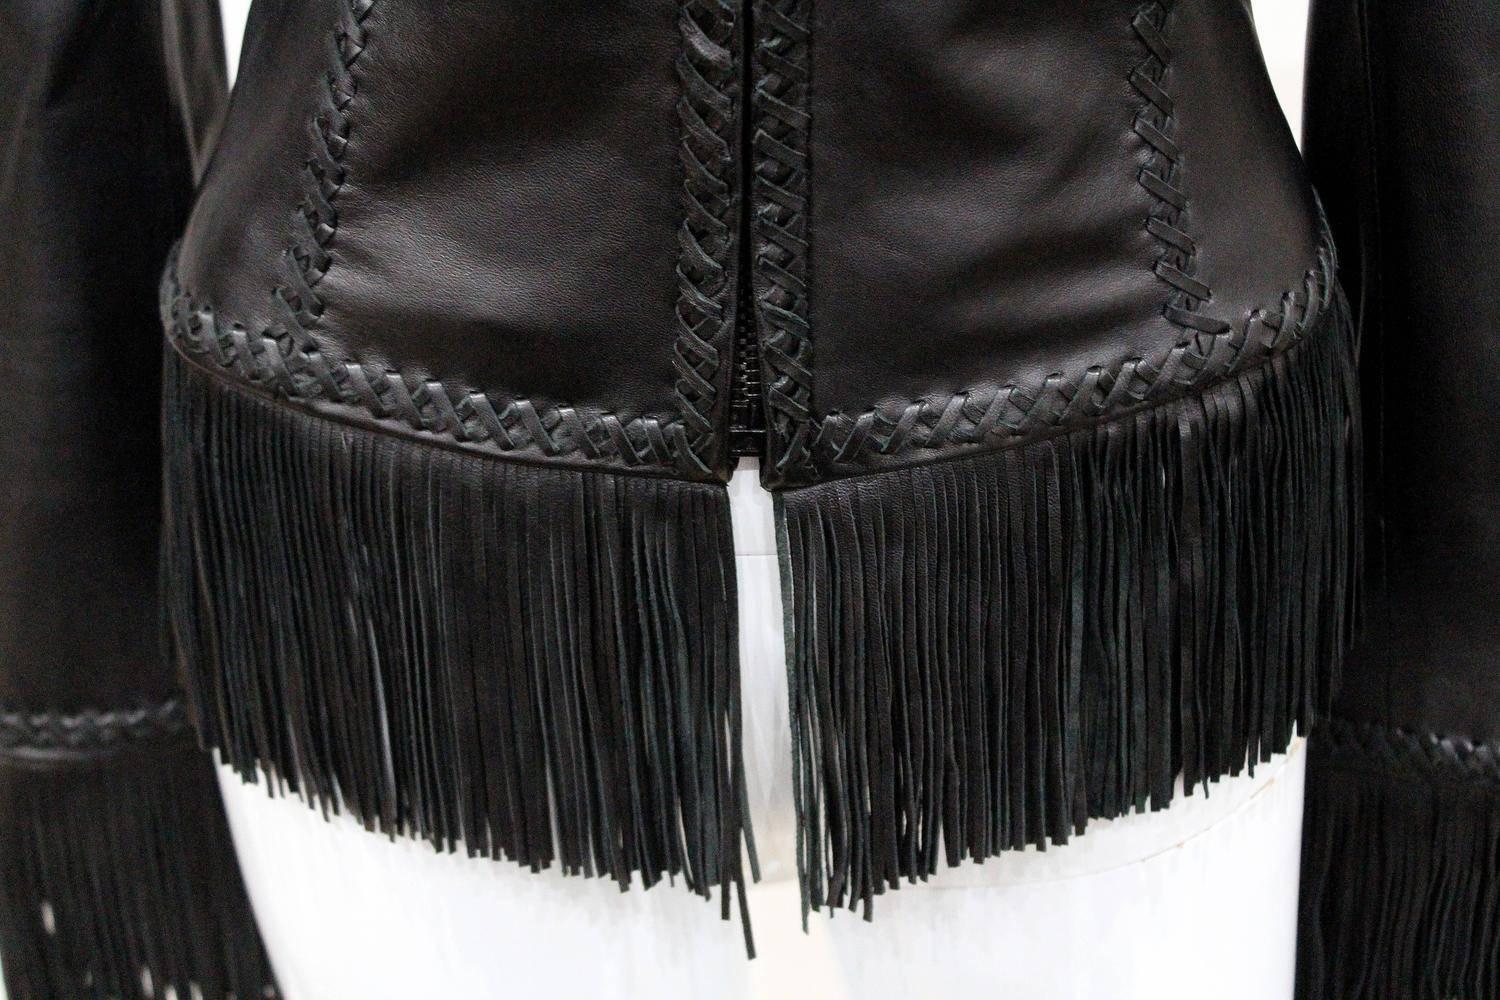 Women's Gianni Versace fringed leather jacket with lace up back, c. 2002